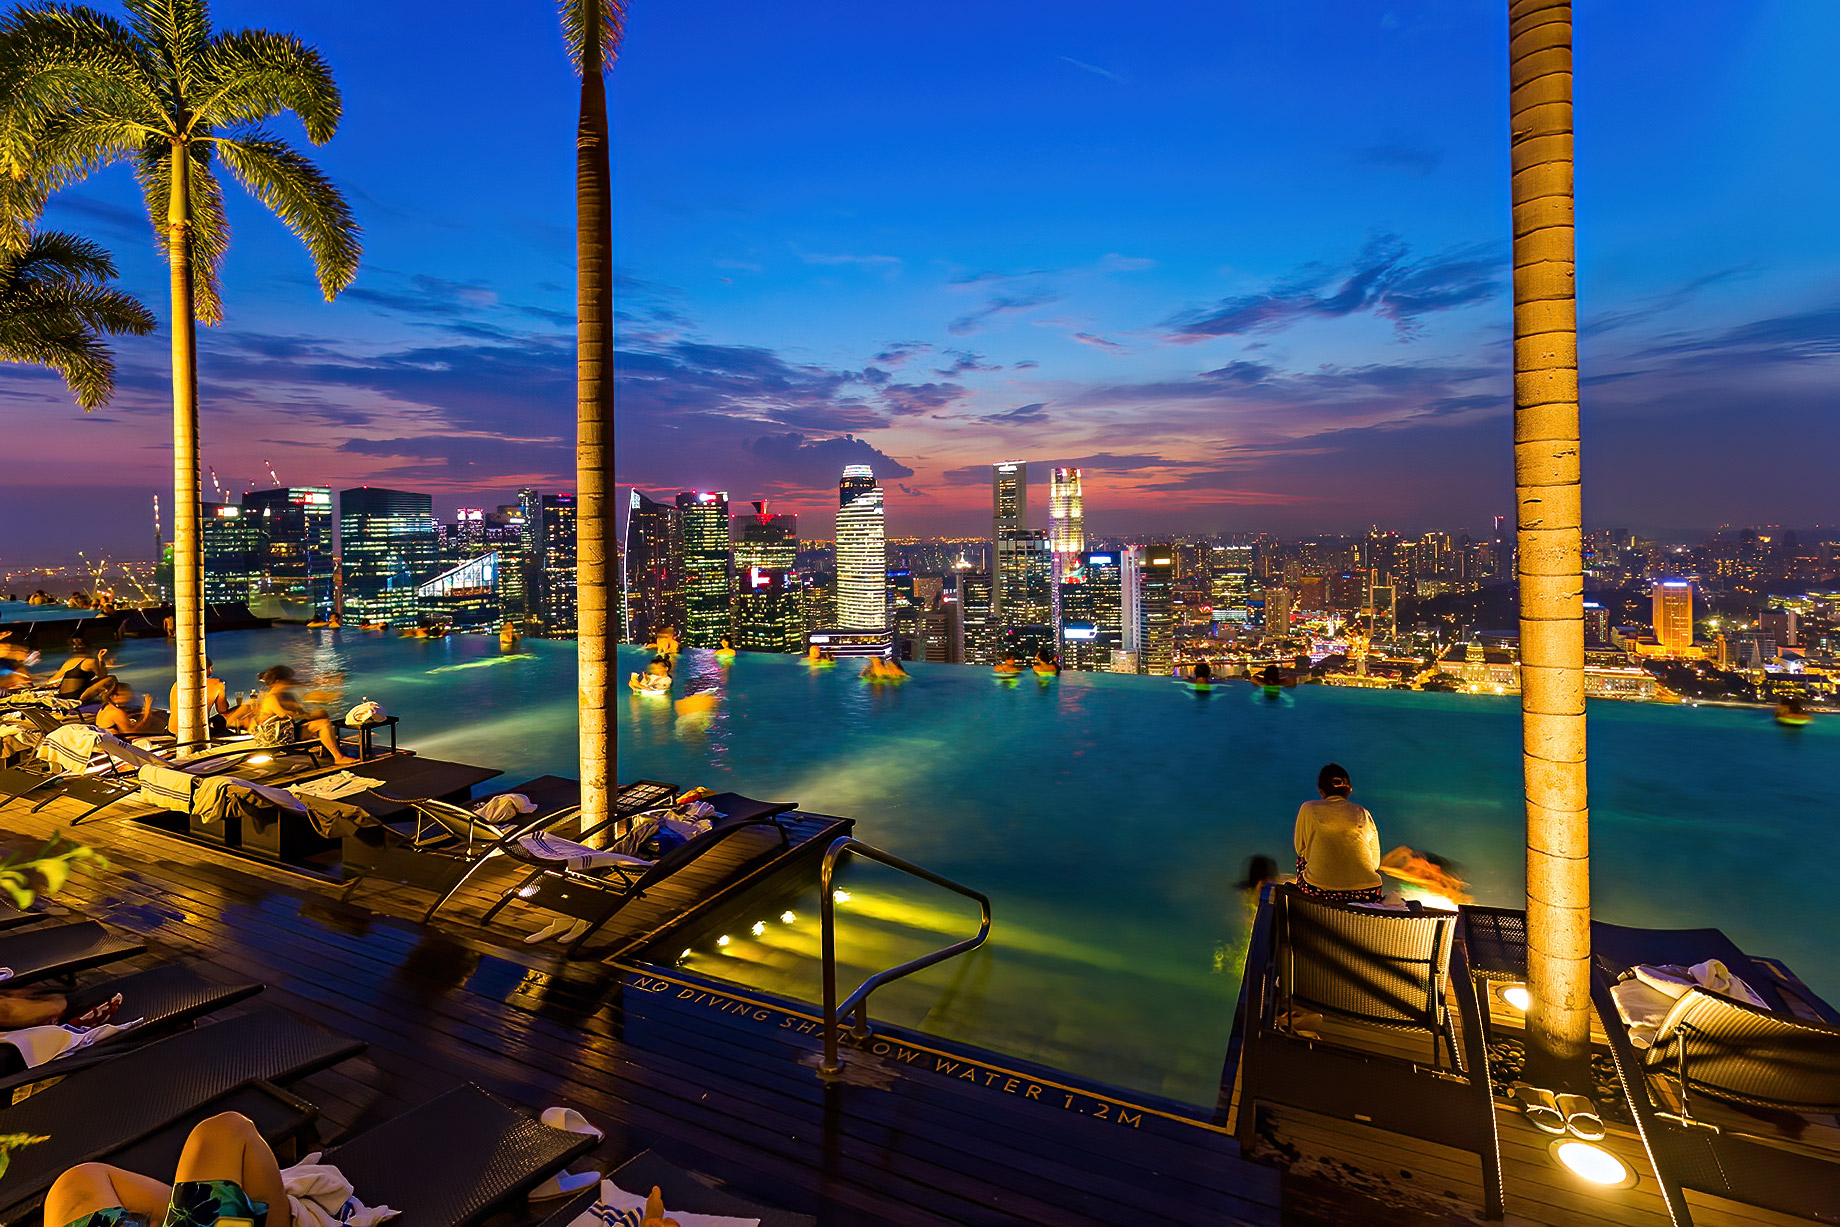 Infinity Pool at Marina Bay Sands Hotel - Singapore